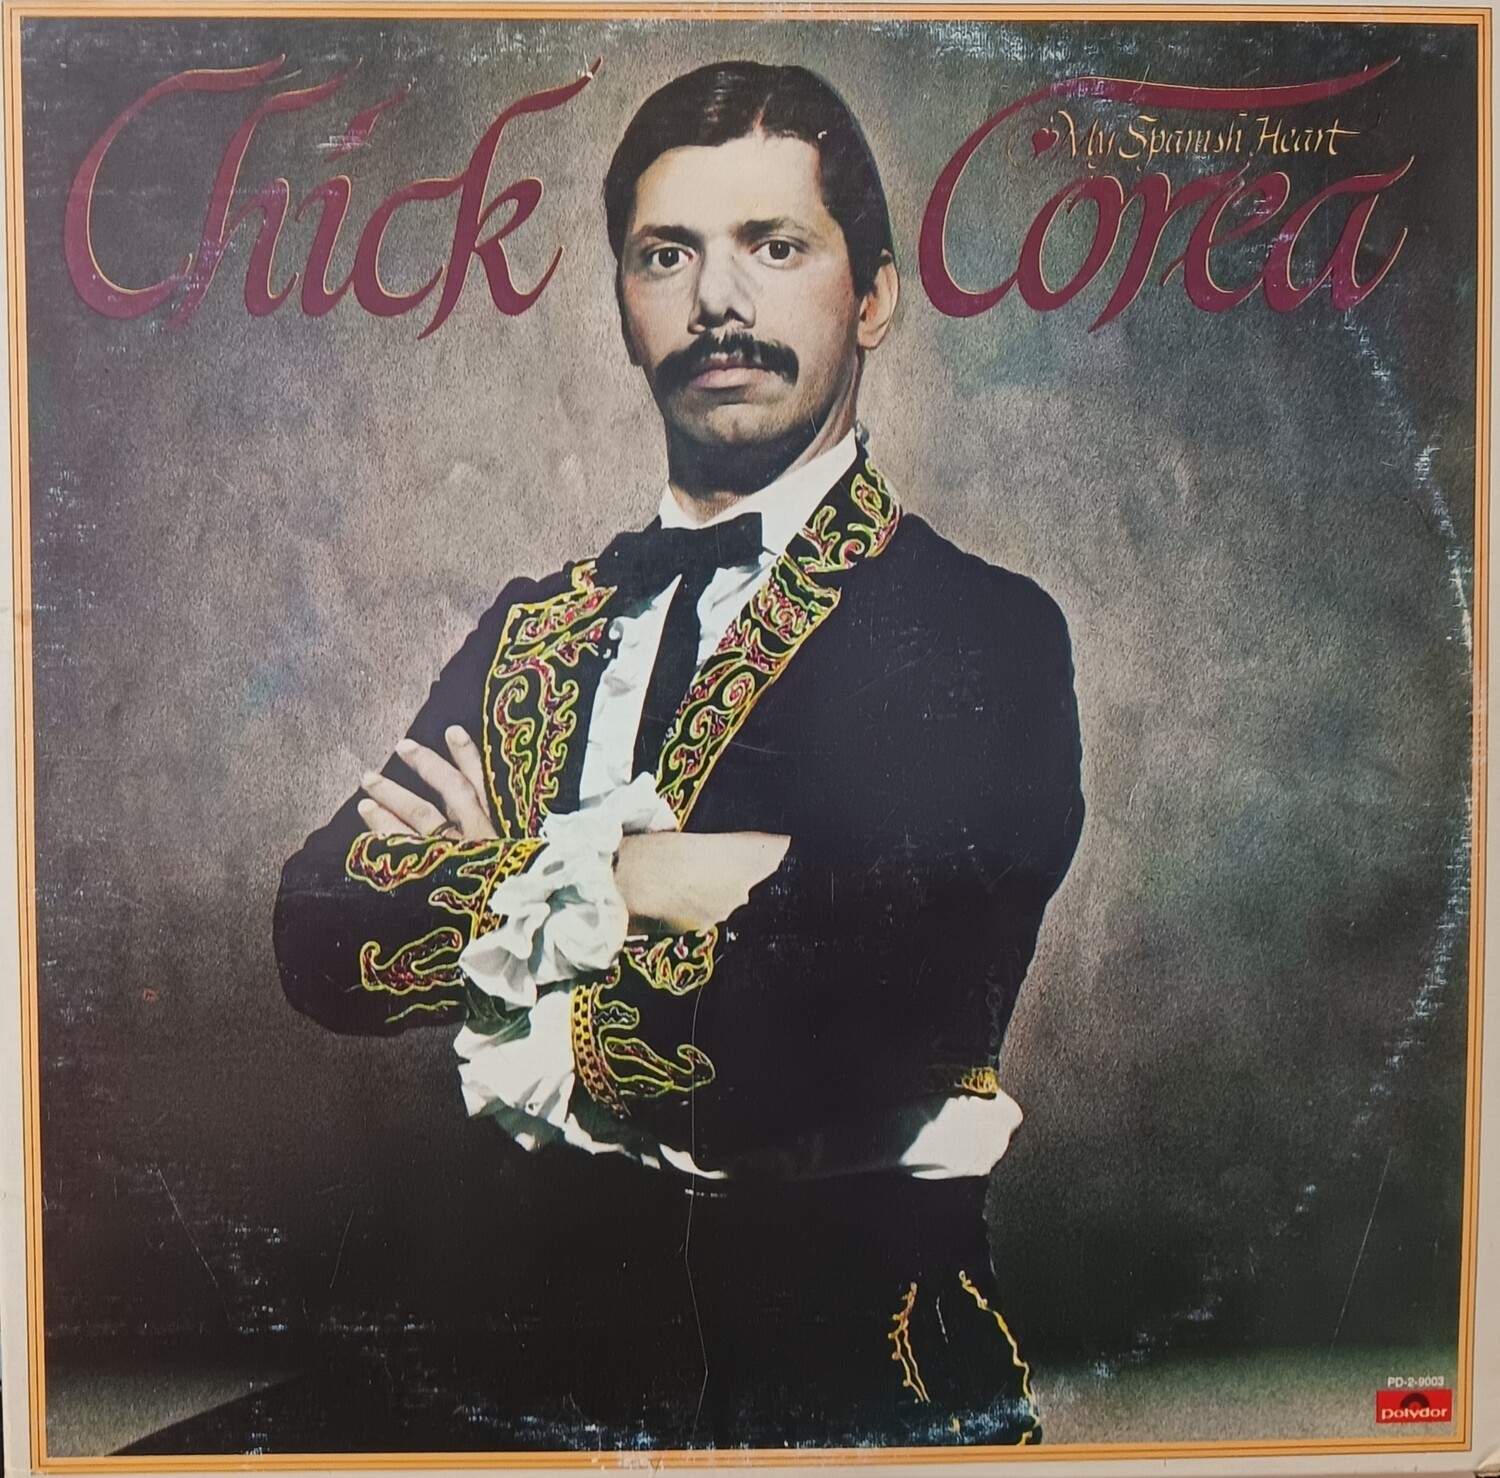 CHICK COREA - My spanish heart